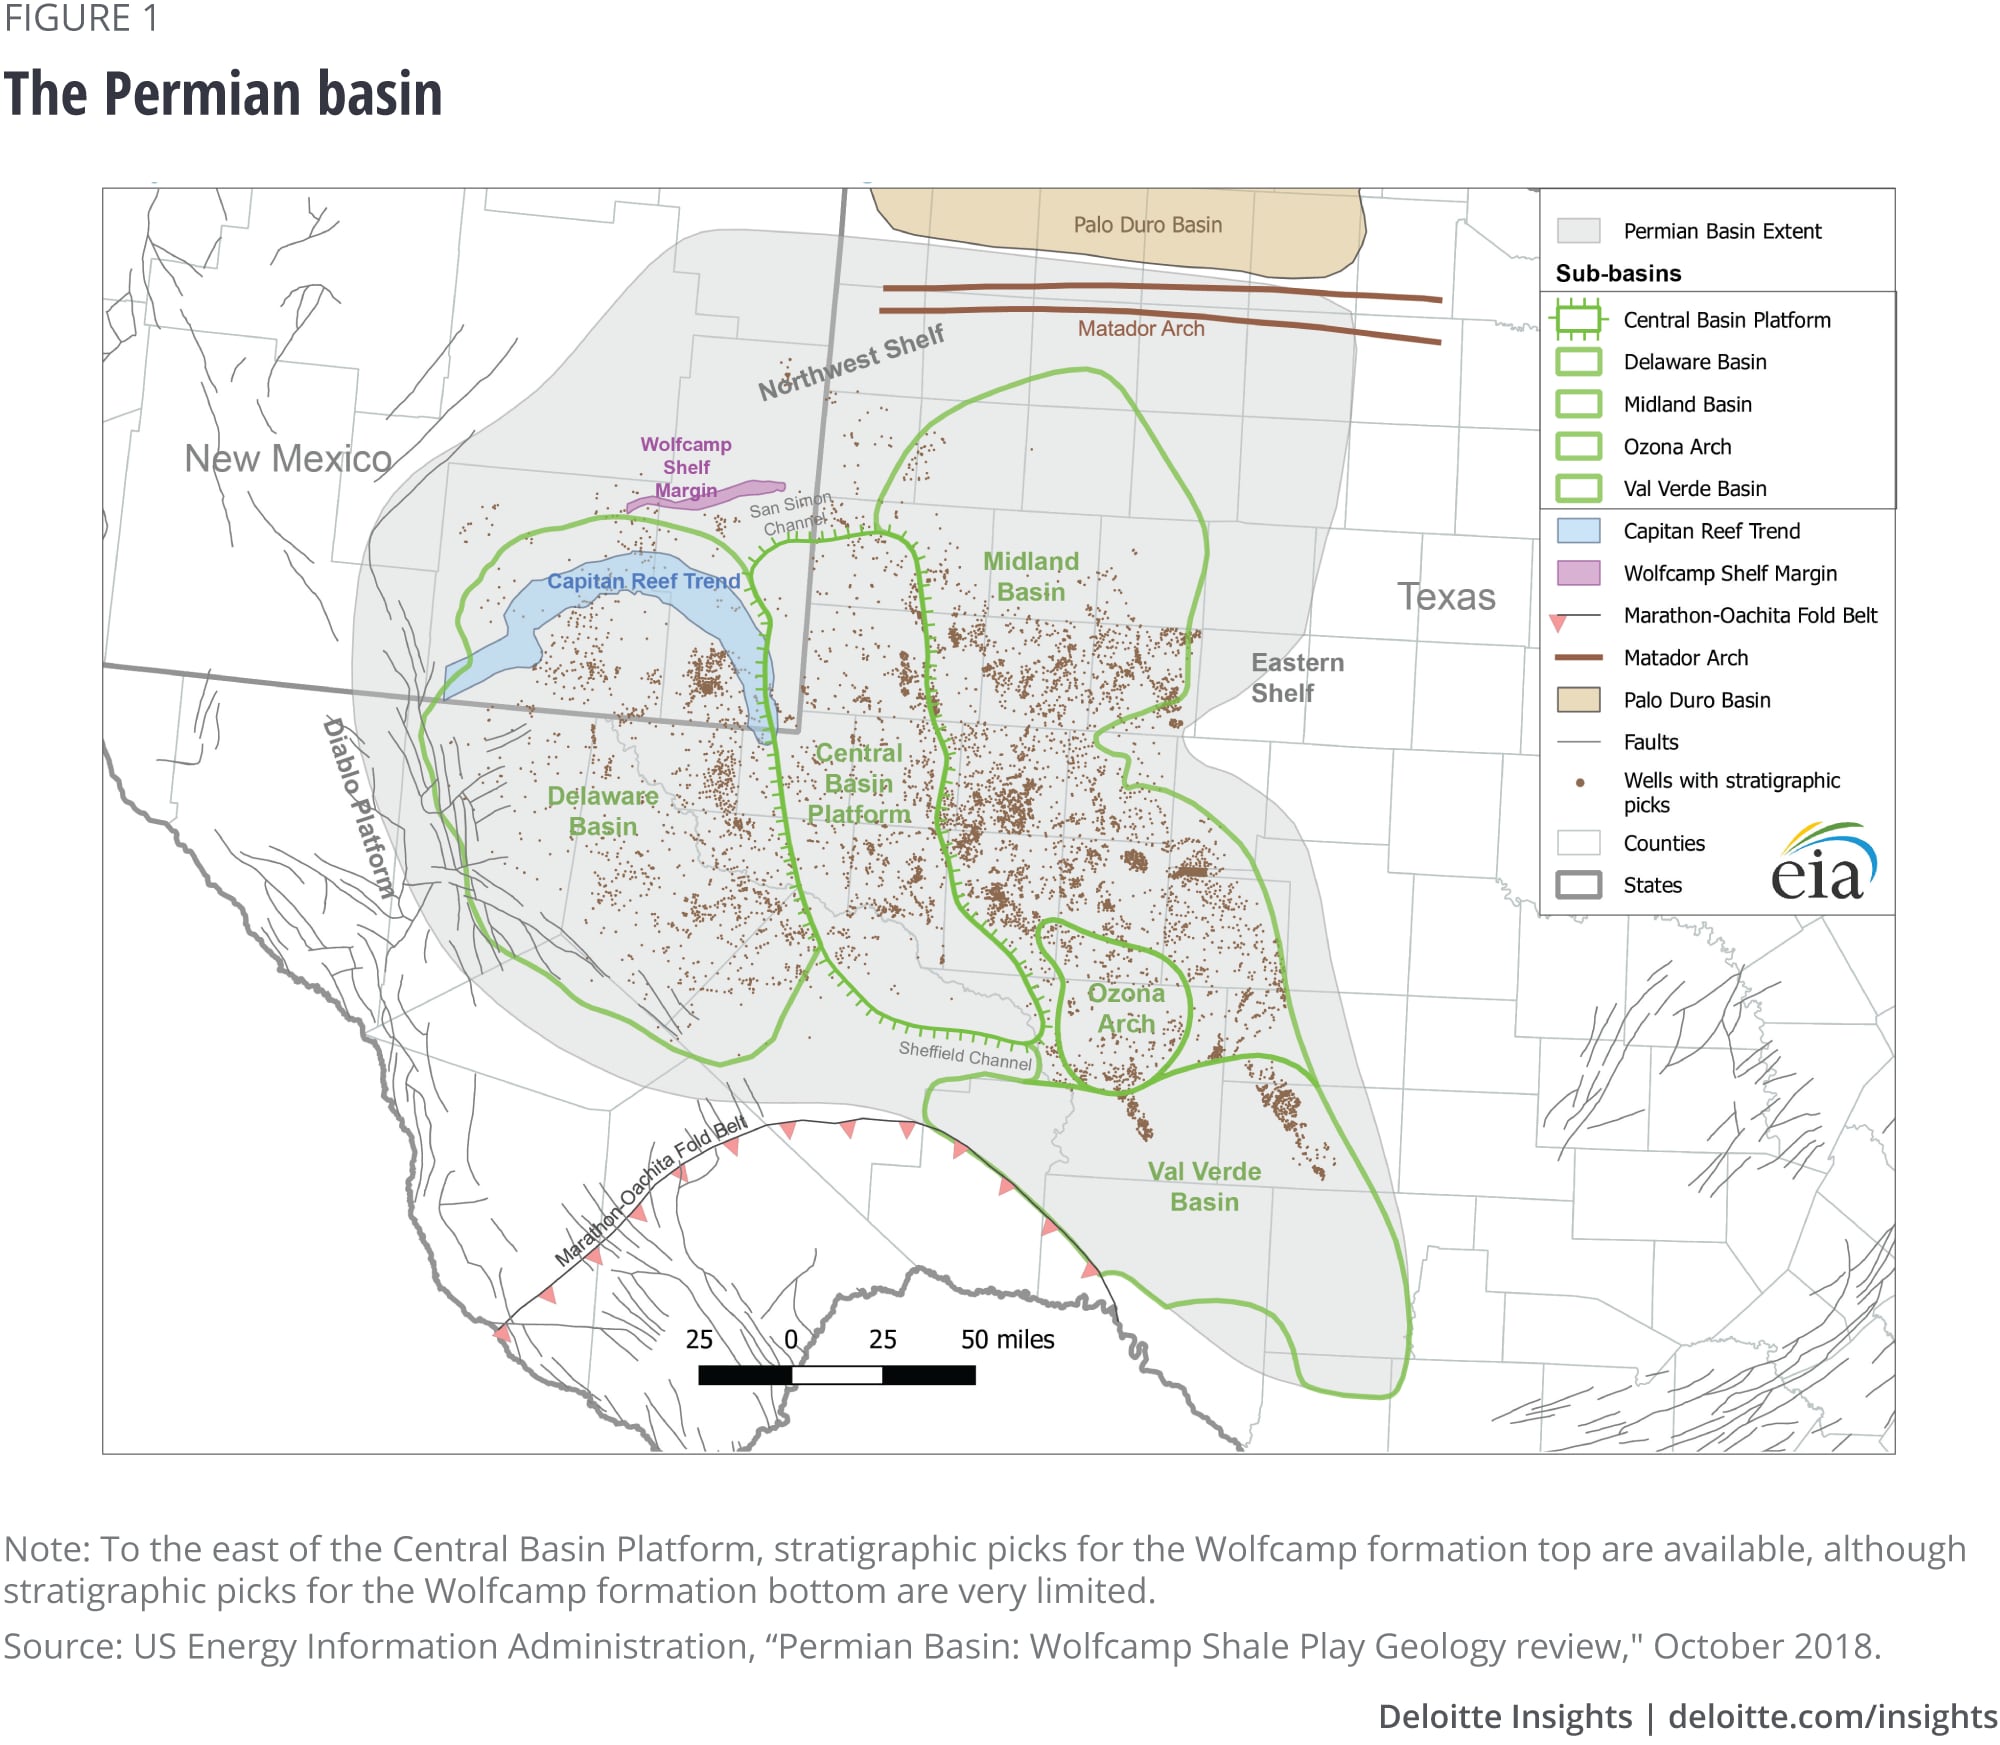 The Permian basin